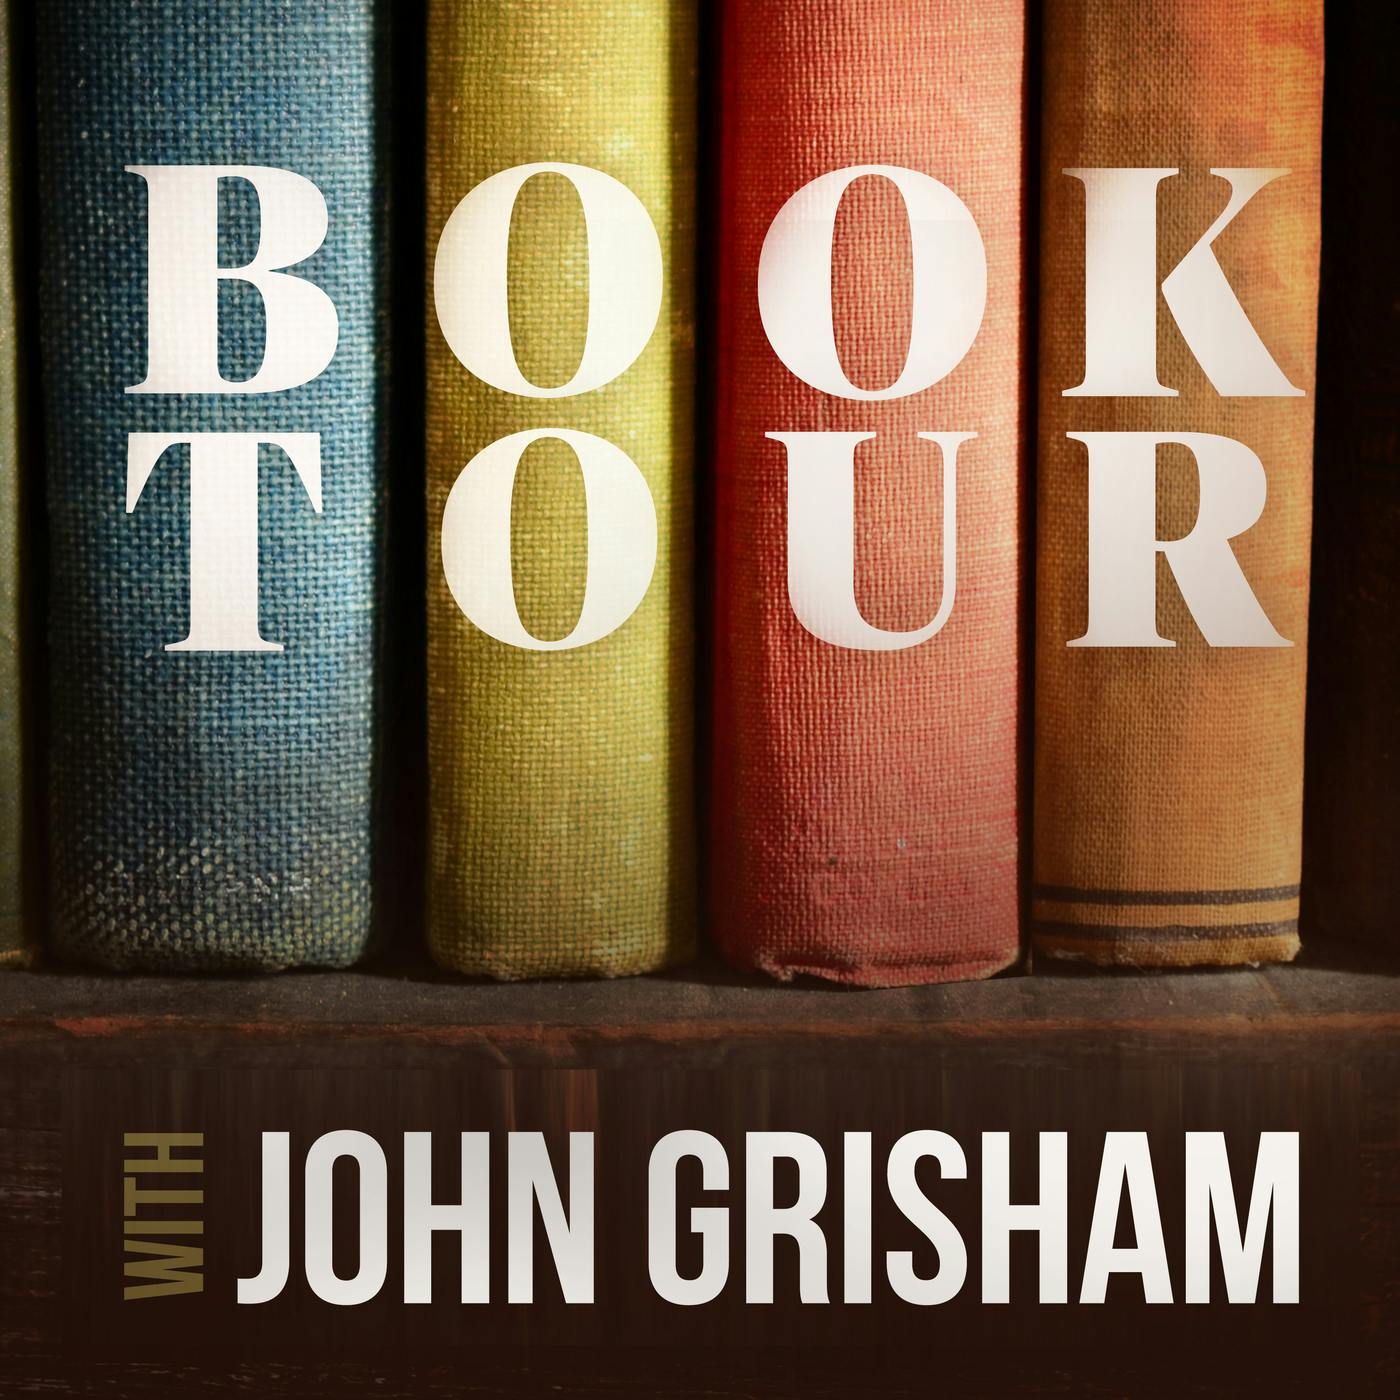 Book Tour with John Grisham - TEASER